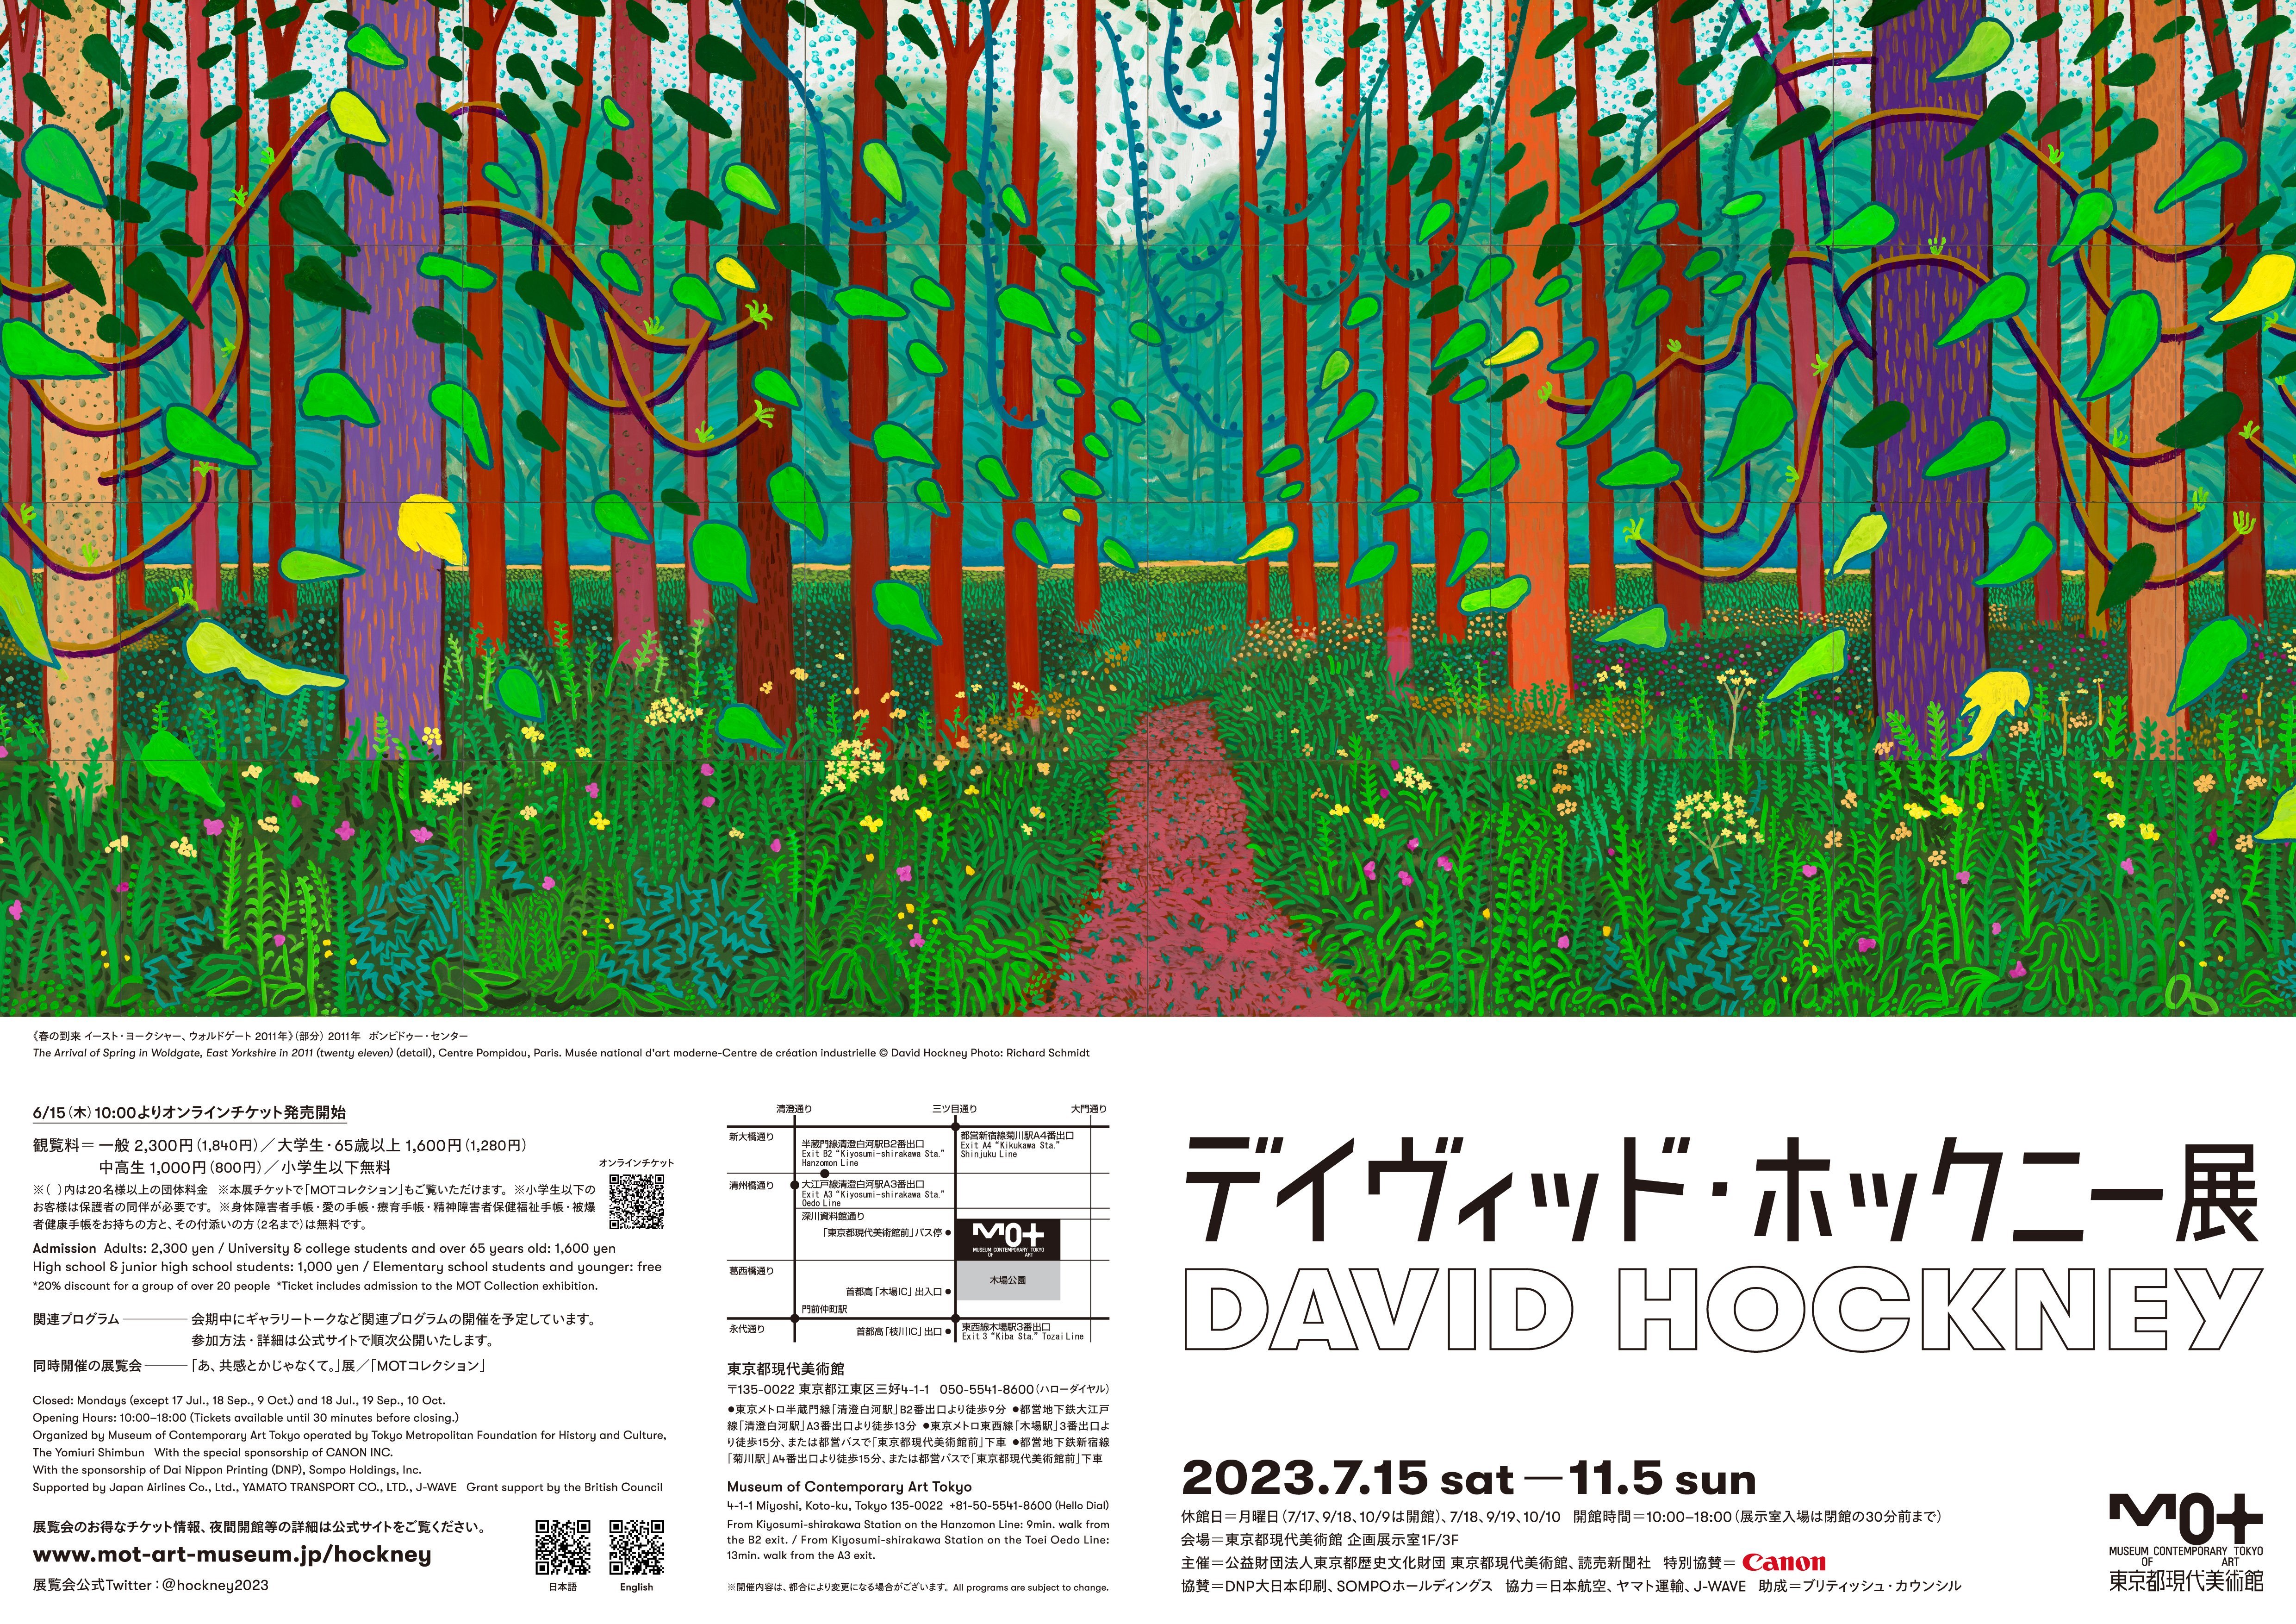 Tokyo 24-ku (12) – The Con Artists